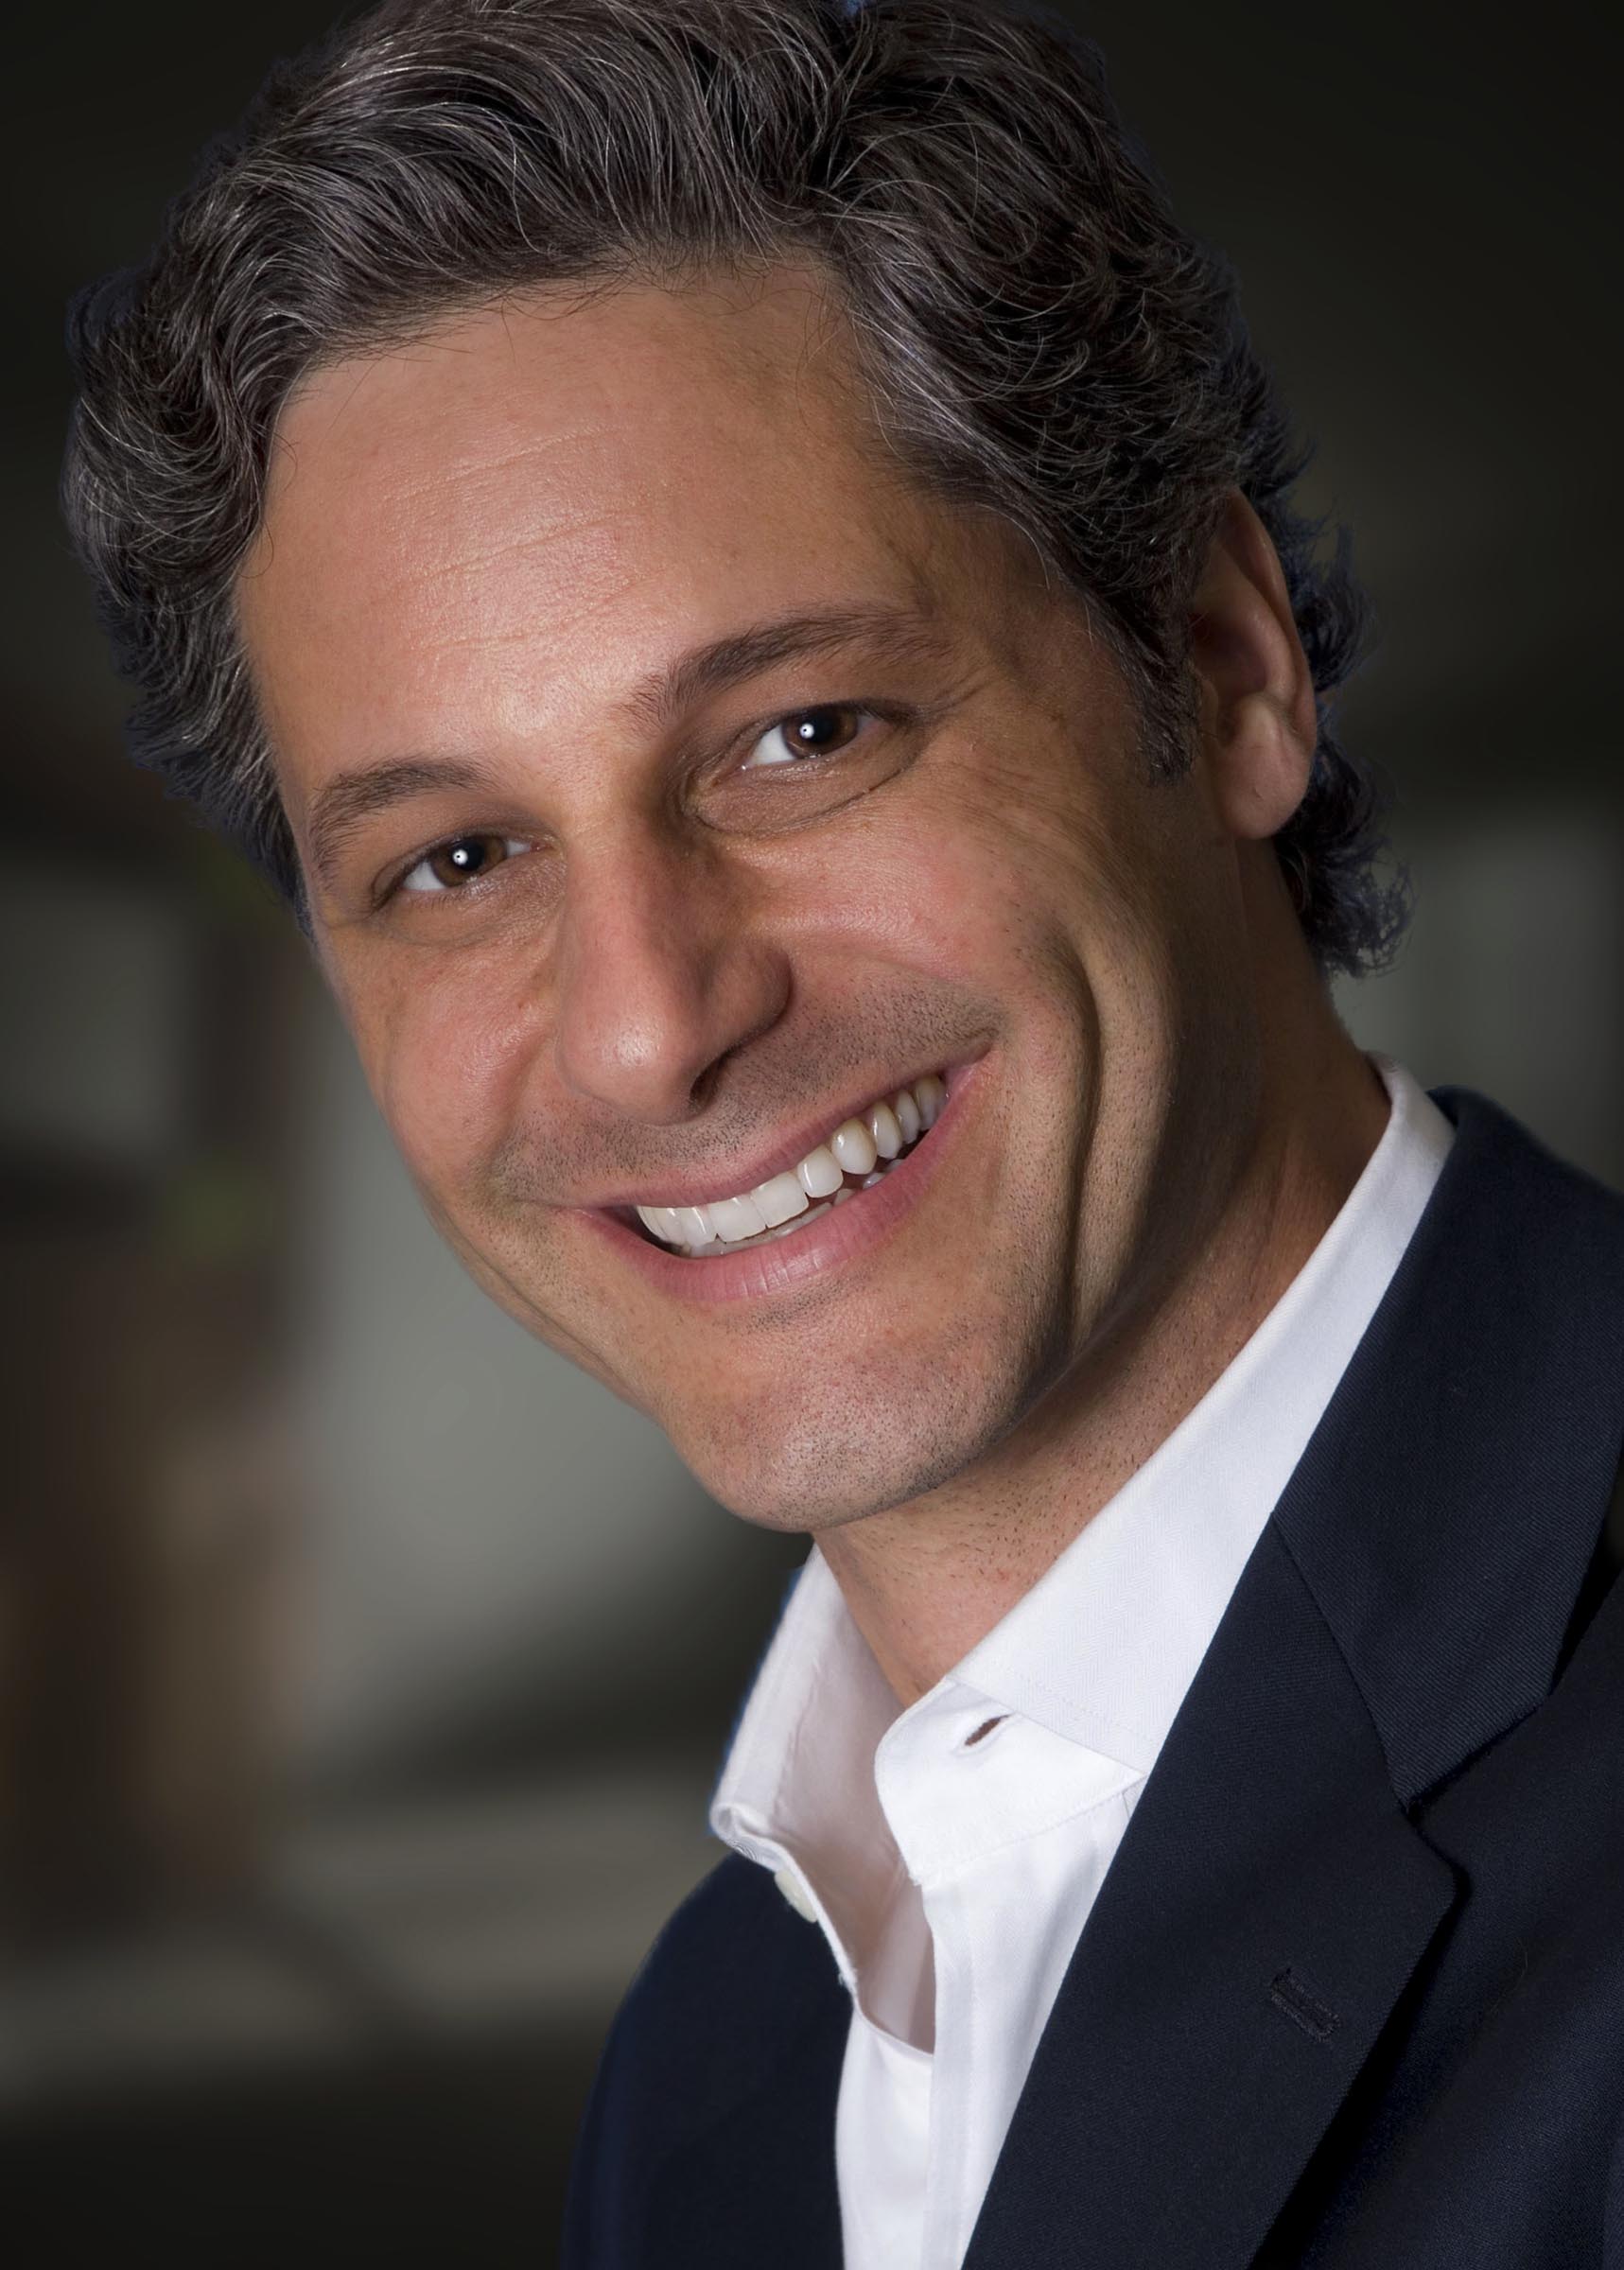 Mr. Peterrini, NYC Professional Corporate Headshot by Tess Steinkolk, Top NYC Executive Headshot Photographer